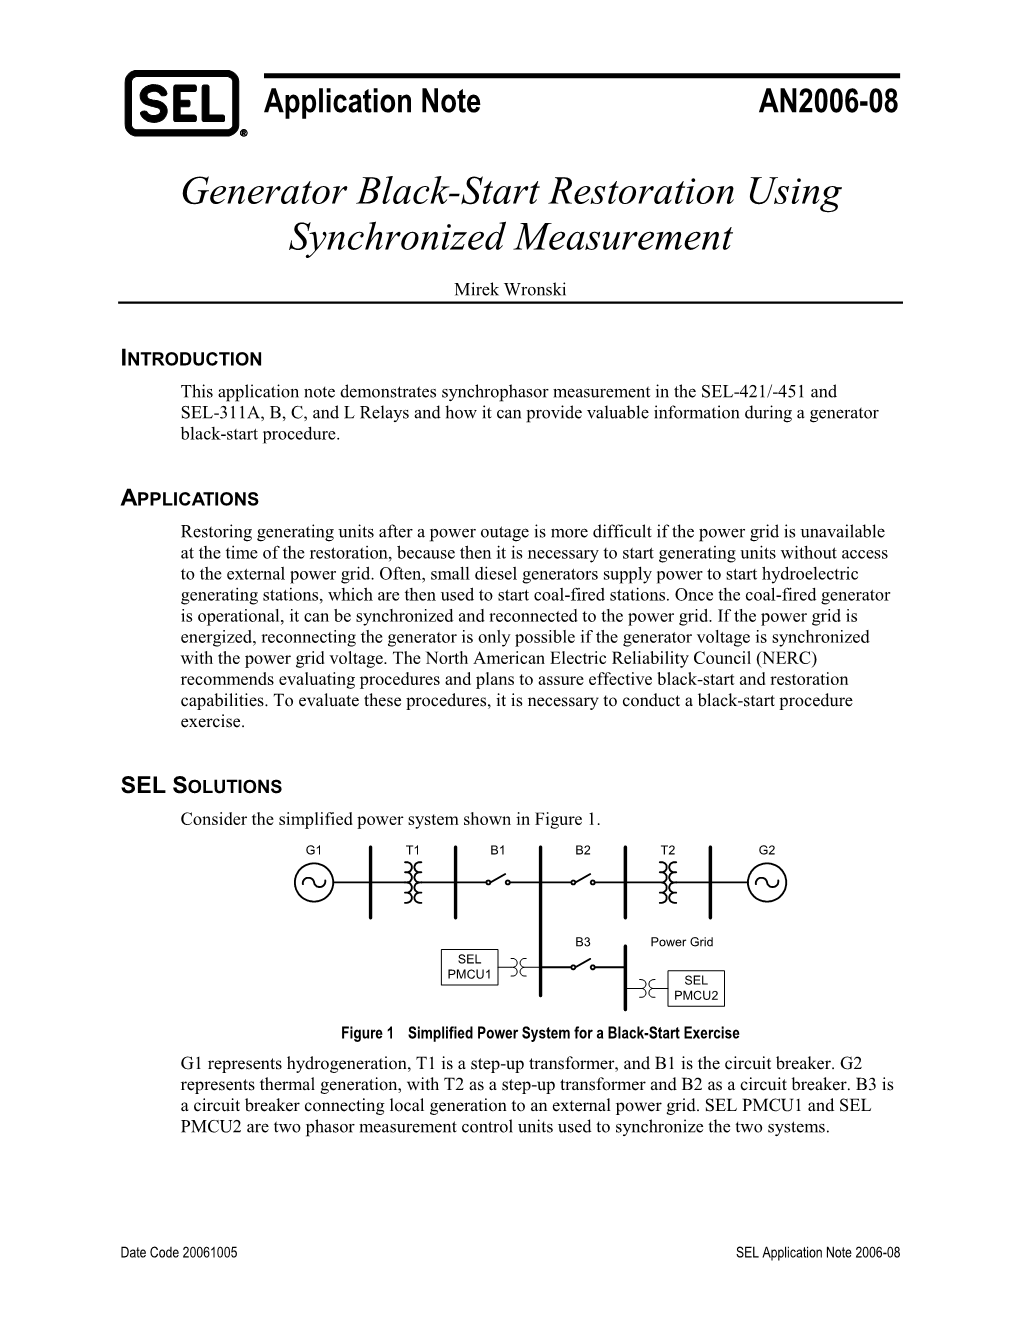 Generator Black-Start Restoration Using Synchronized Measurement